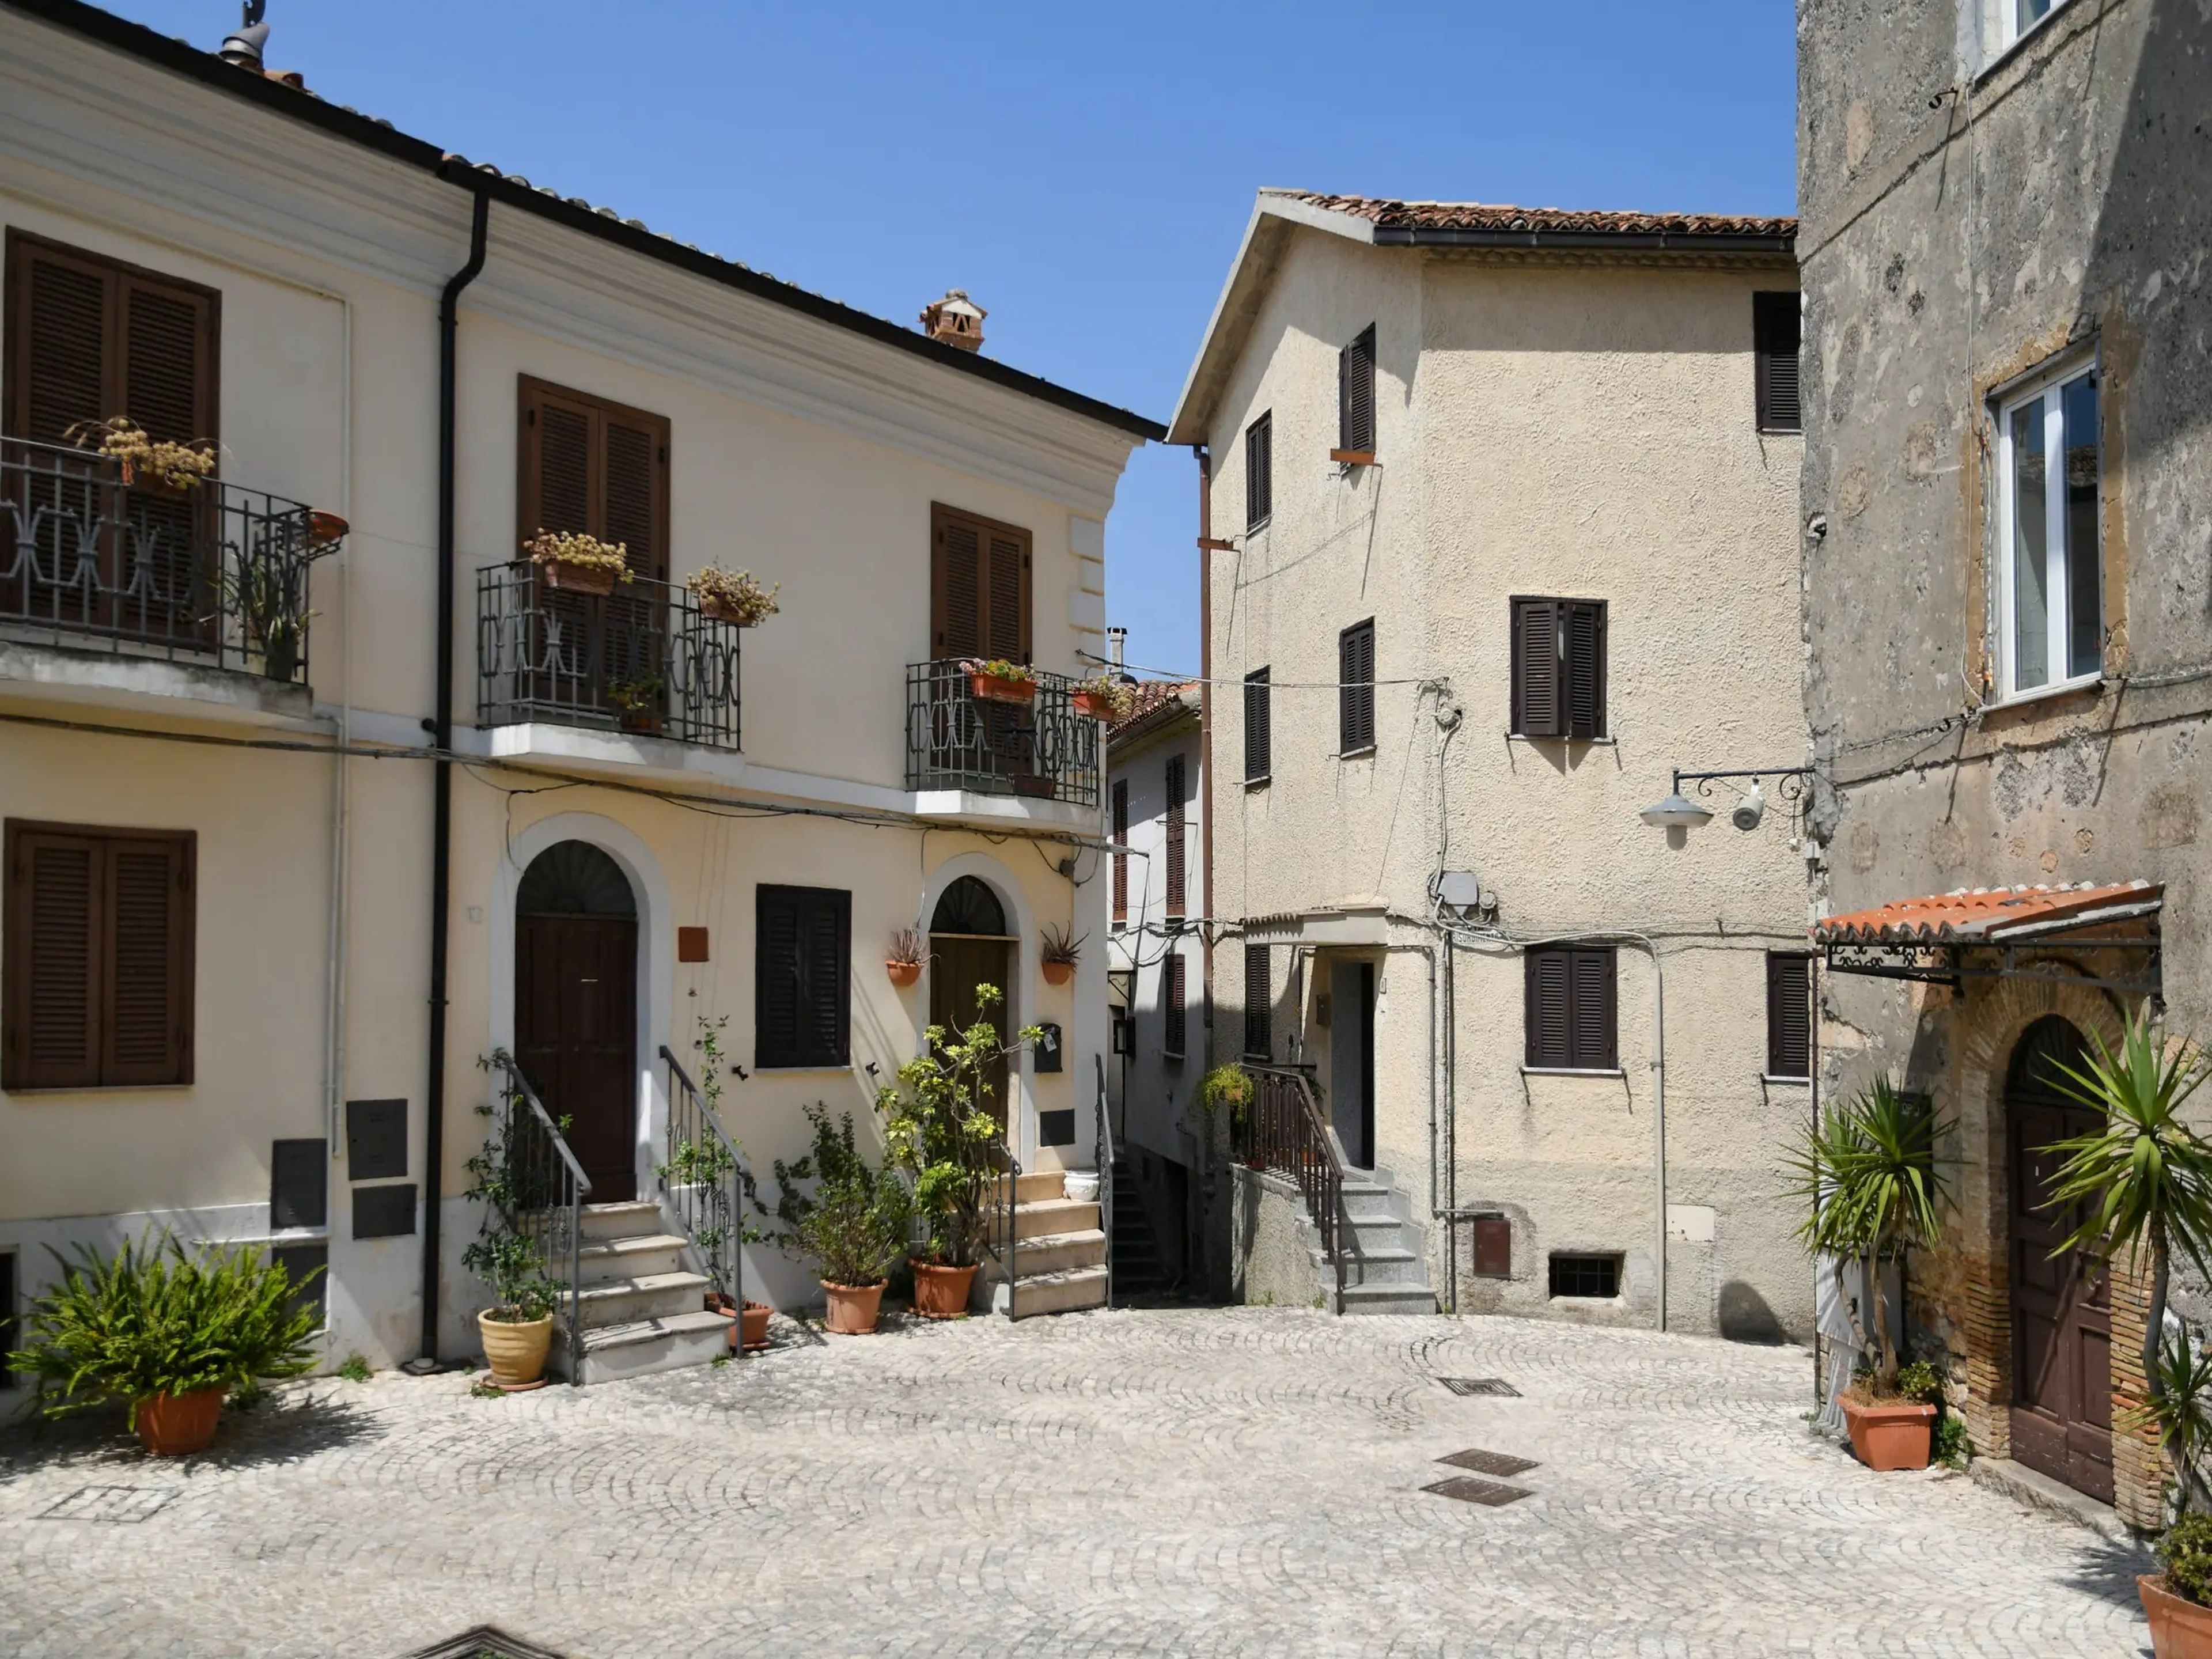 A small, empty street in Maenza, a medieval village in the Lazio region. Blue skies.